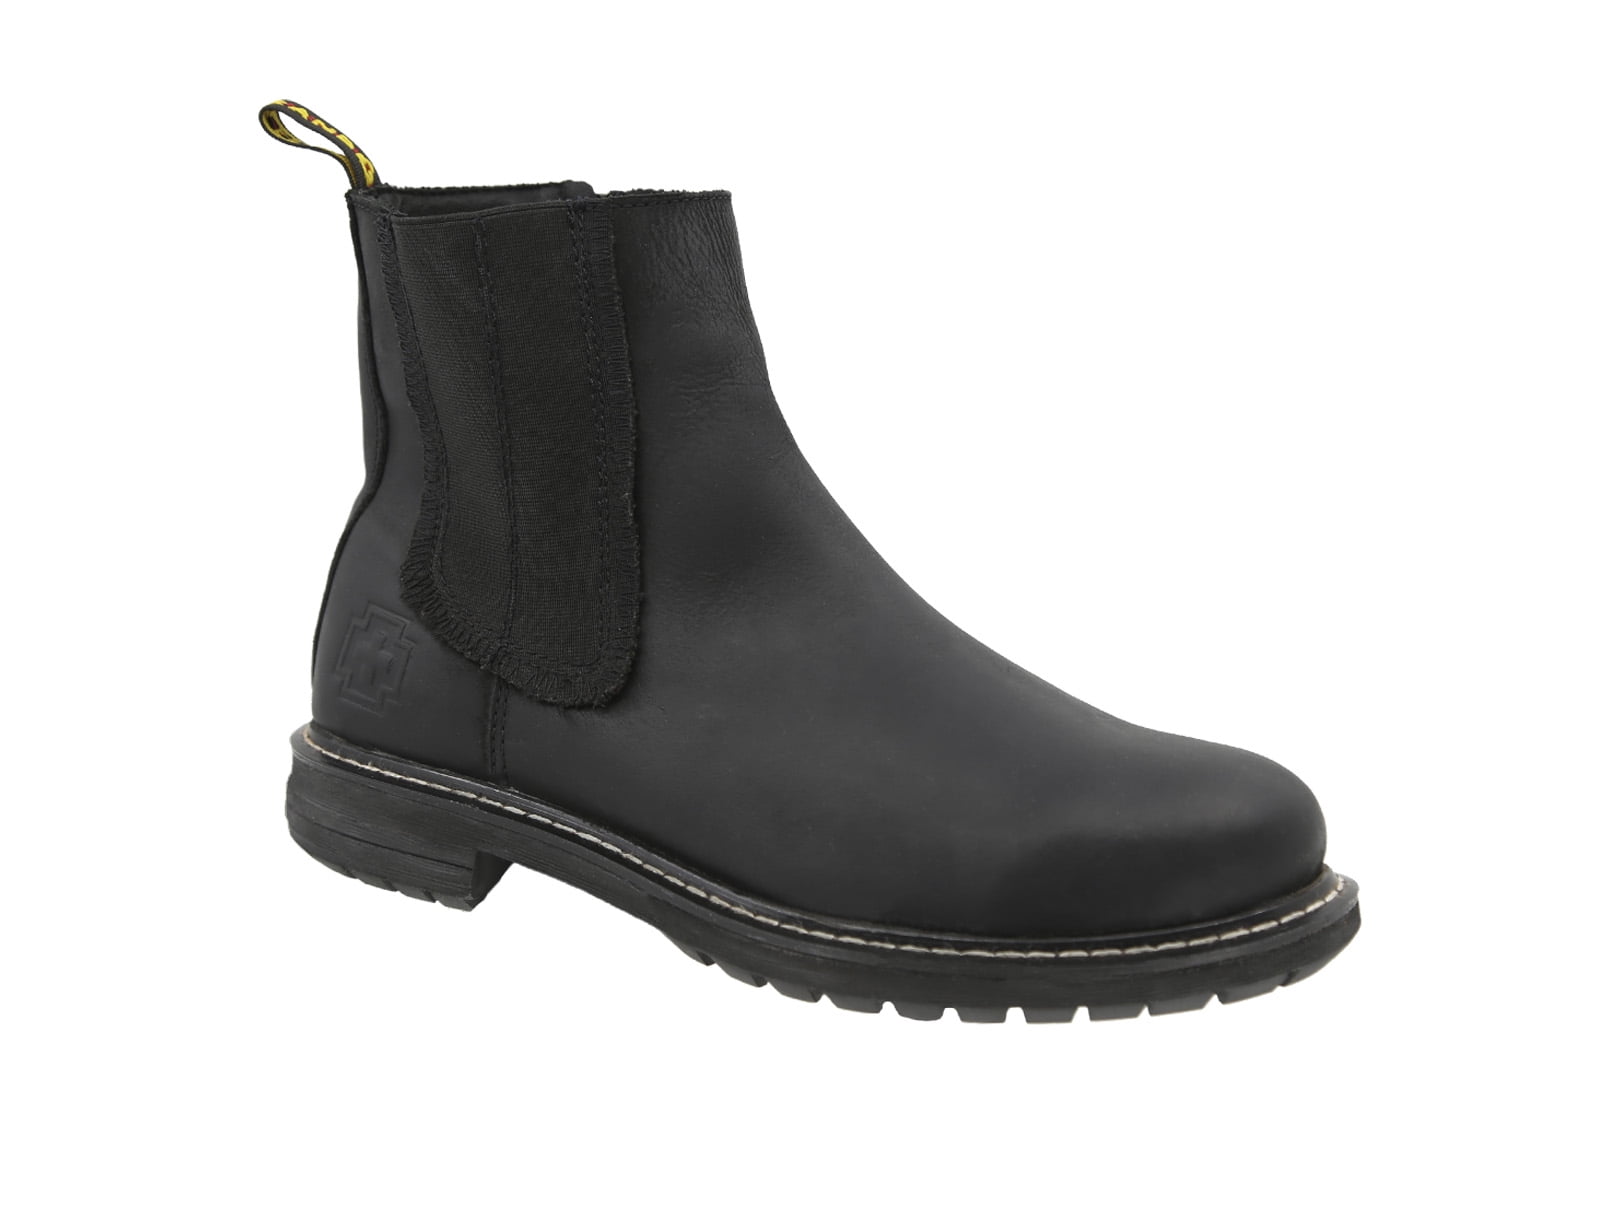 Swissbrand Zug men's Chelsea boots | Leather Boots |Black color ...